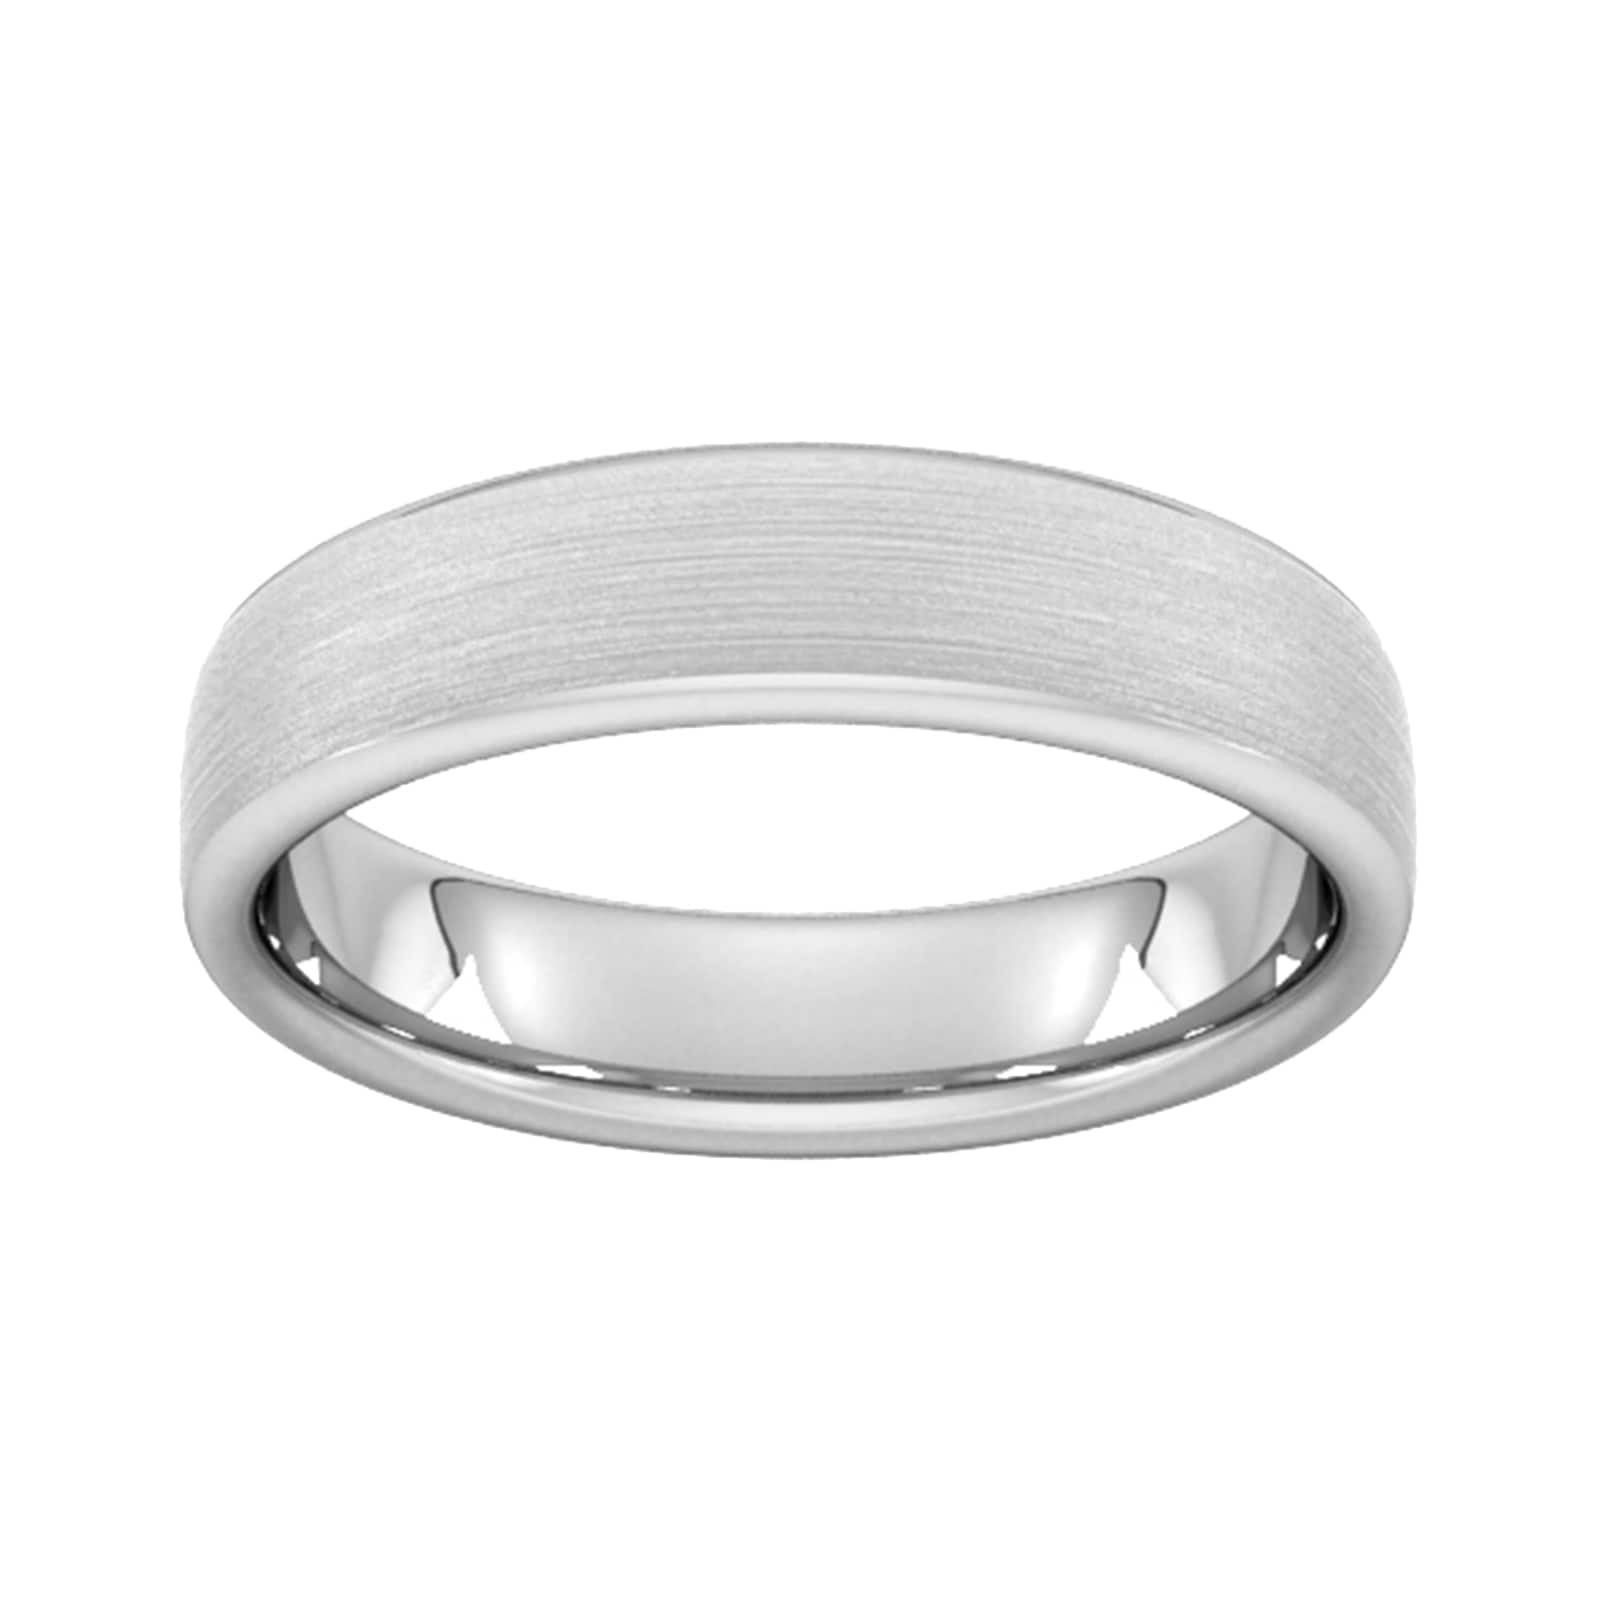 5mm Slight Court Standard Matt Finished Wedding Ring In 950 Palladium - Ring Size K